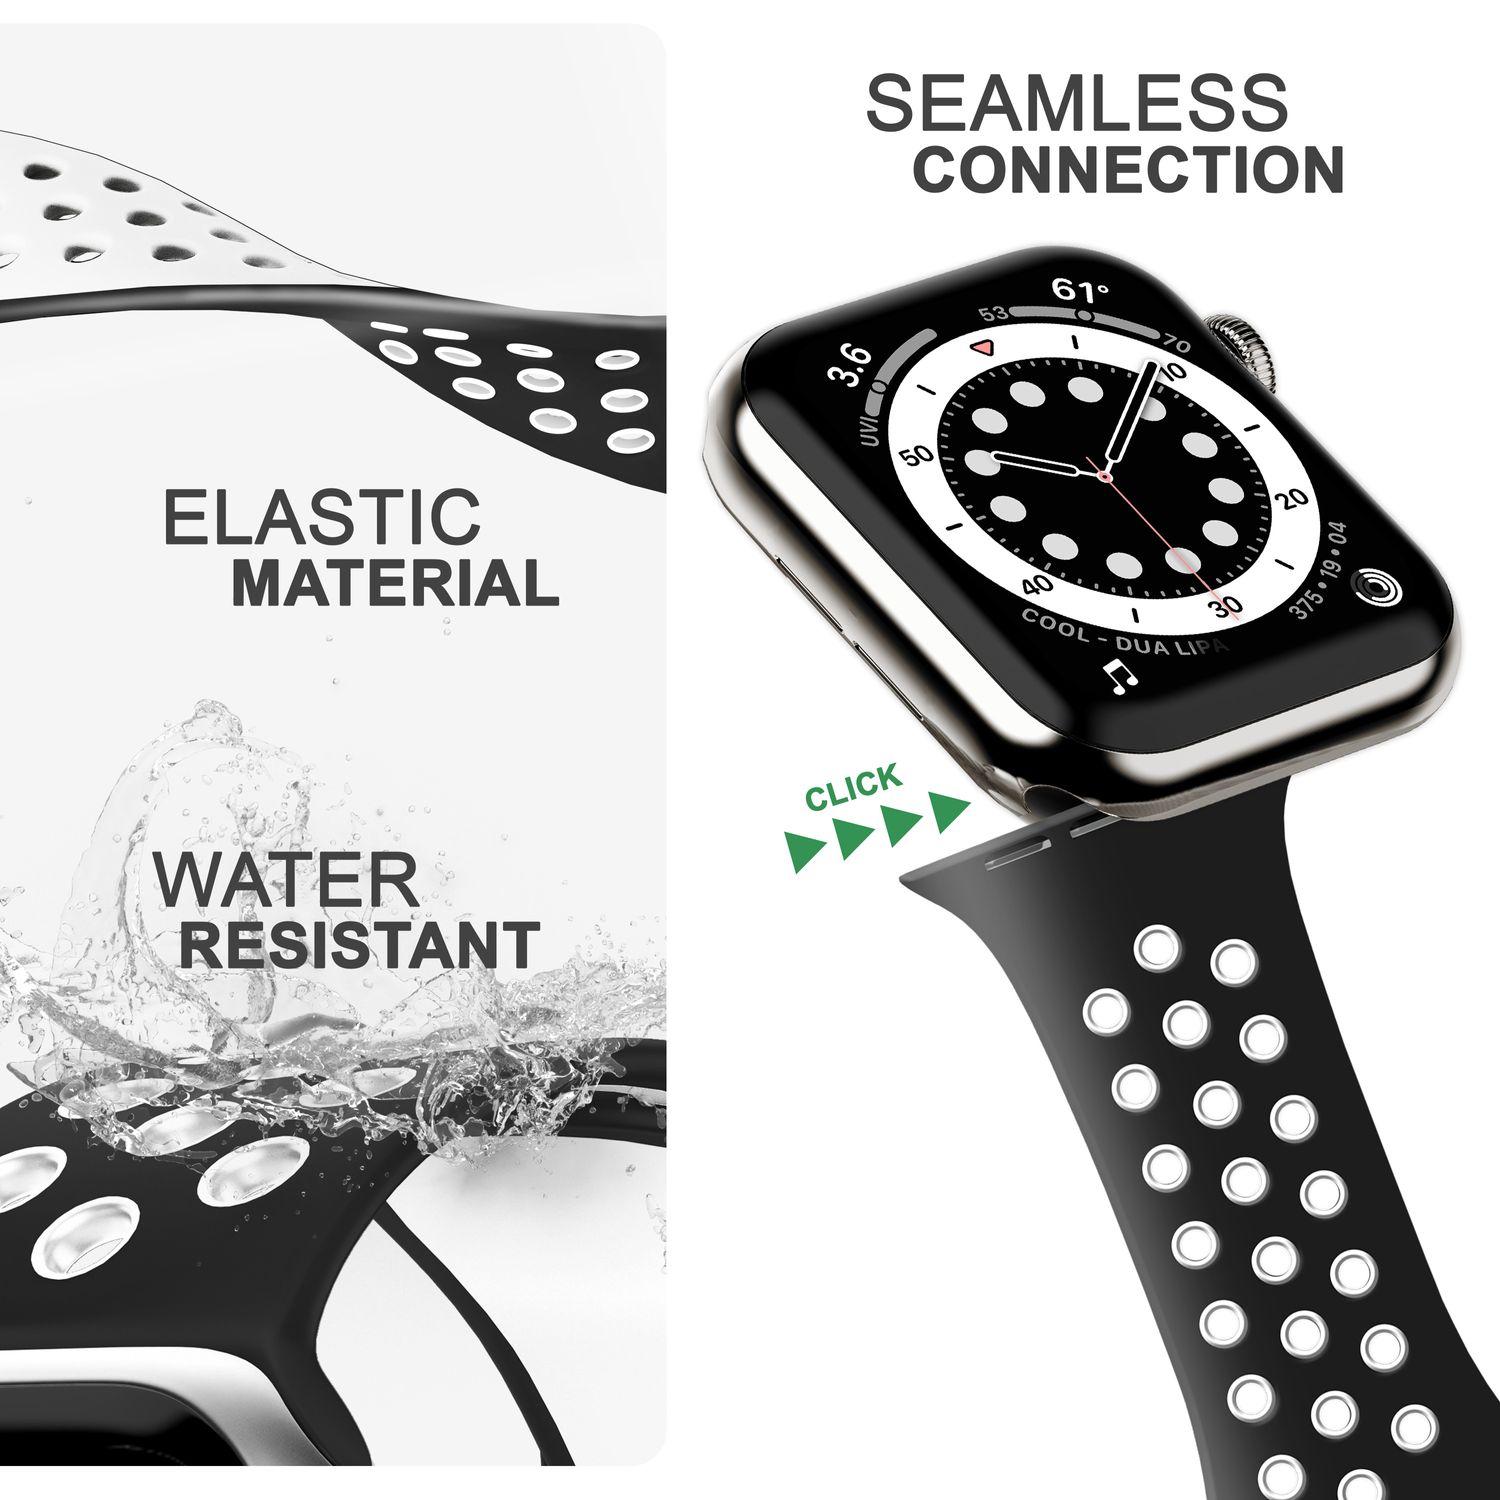 Schwarz Armband, Watch Silikon 42mm/44mm/45mm/49mm, NALIA Weiß Smart-Watch Airflow Apple, Apple Ersatzarmband,